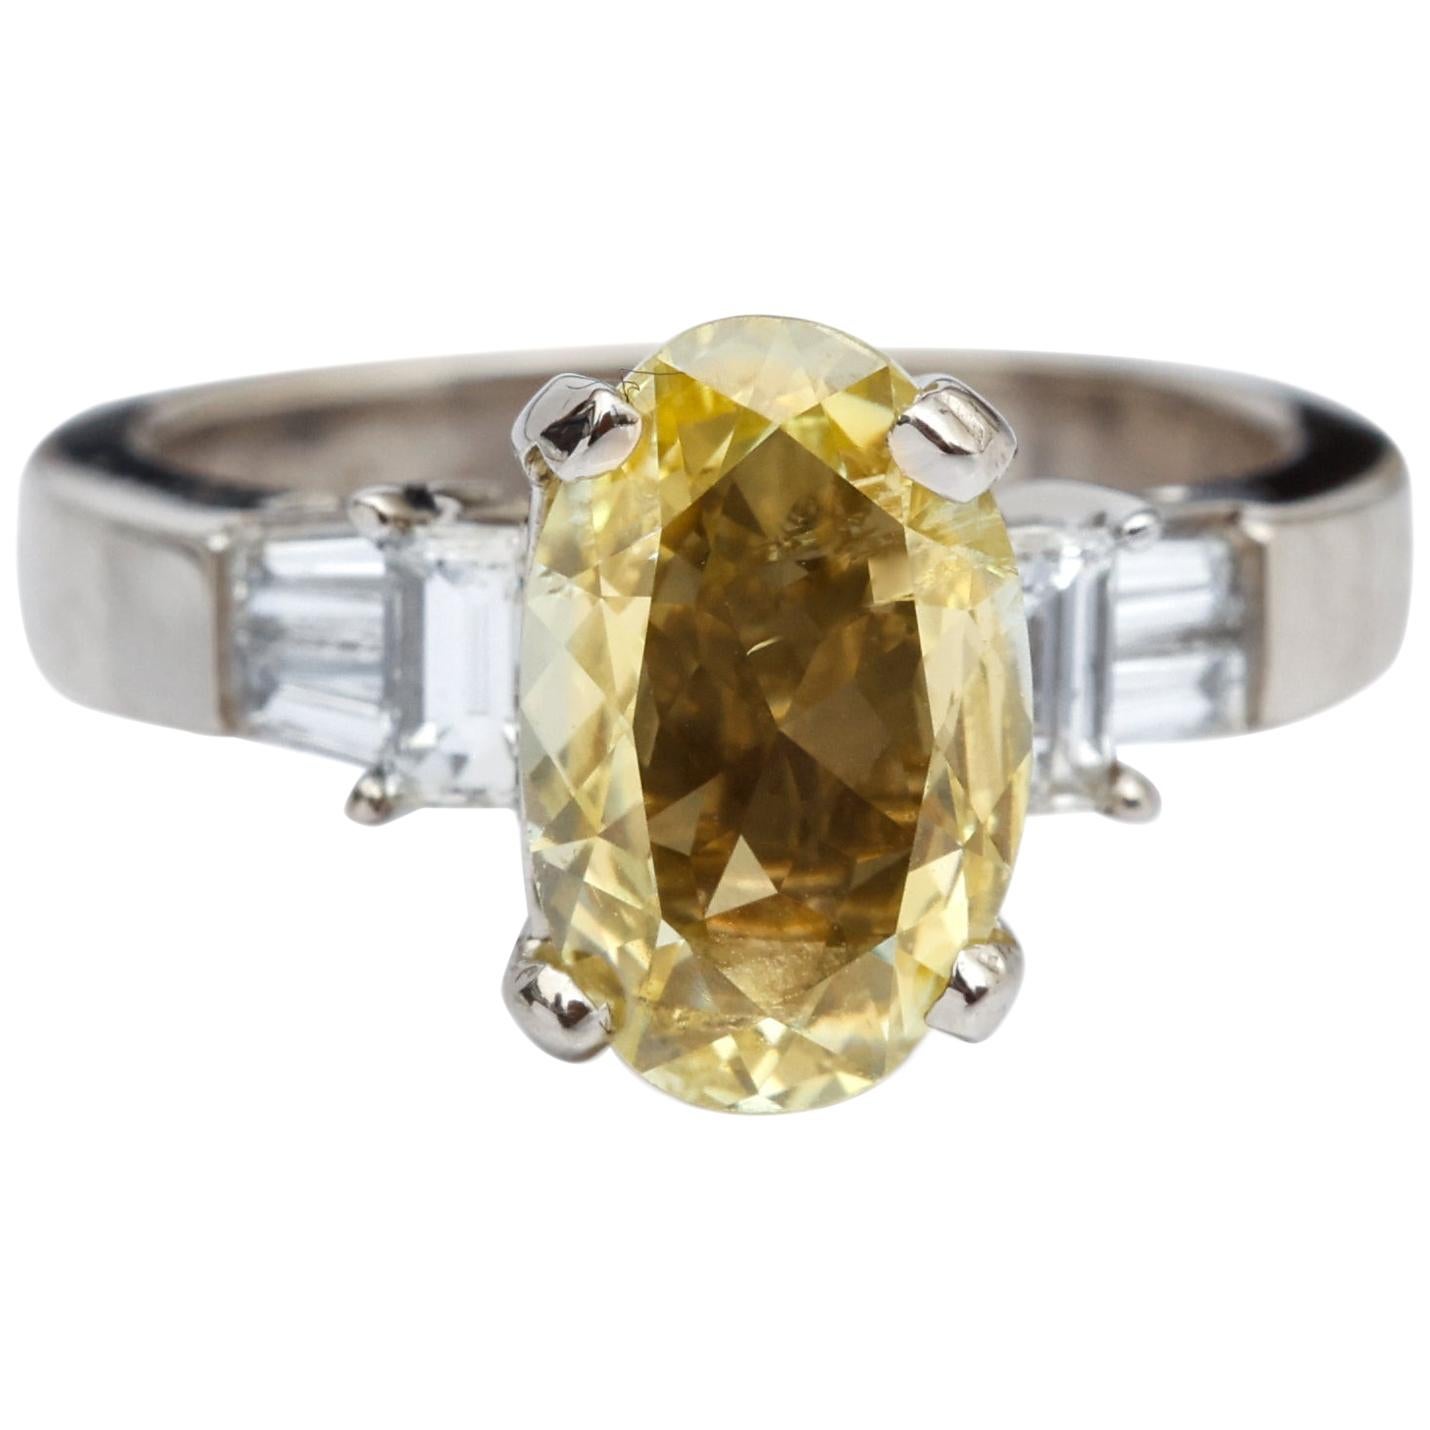 1.34 Carat Canary Yellow Diamond Engagement Ring, Platinum